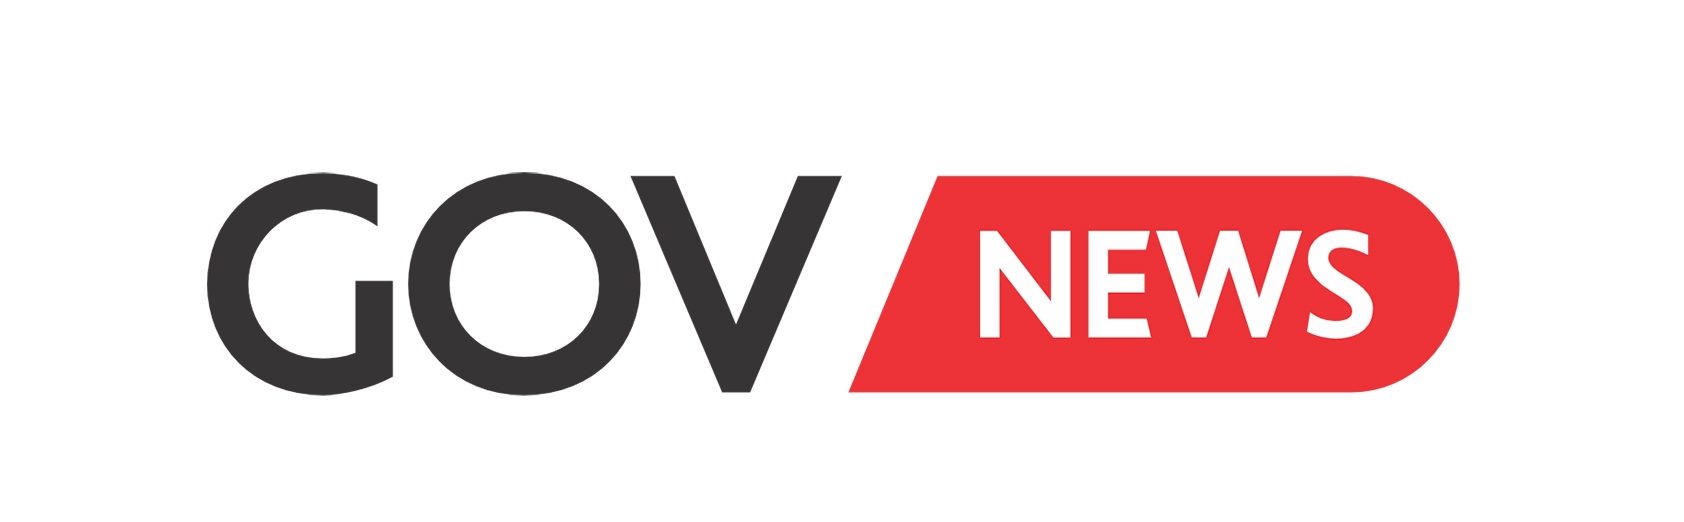 govnews logo Digihart